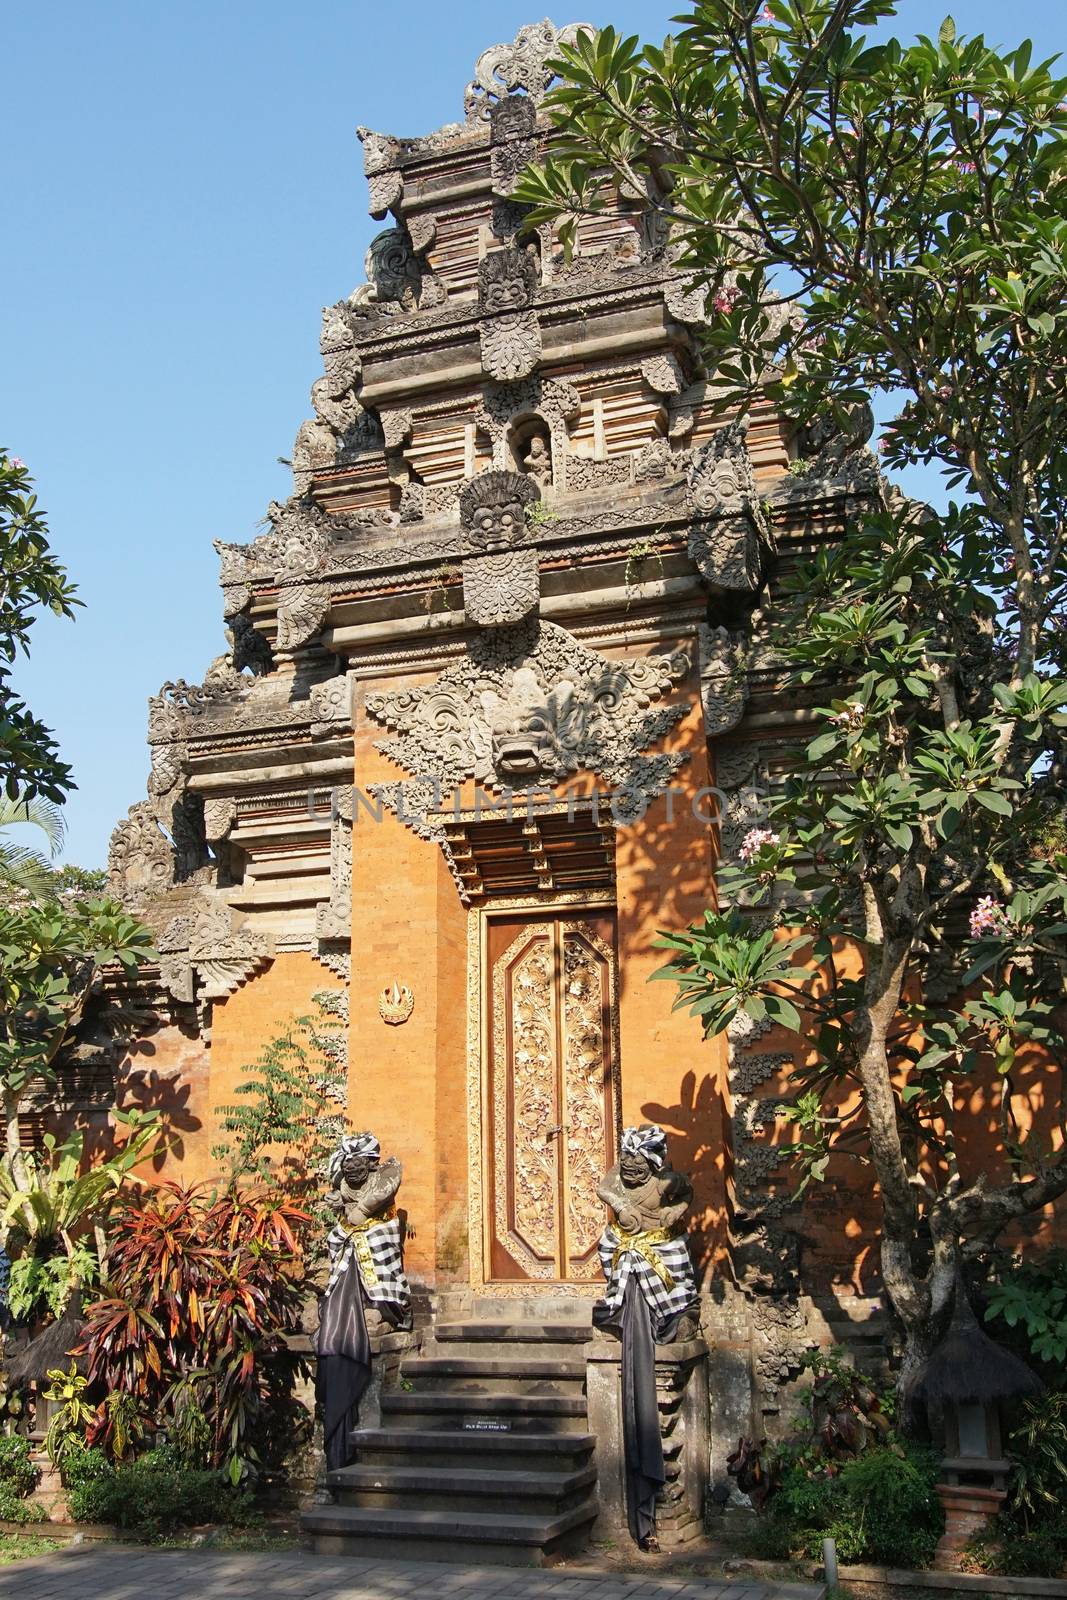 Puri Saren, Ubud, Bali, Indonesia by alfotokunst